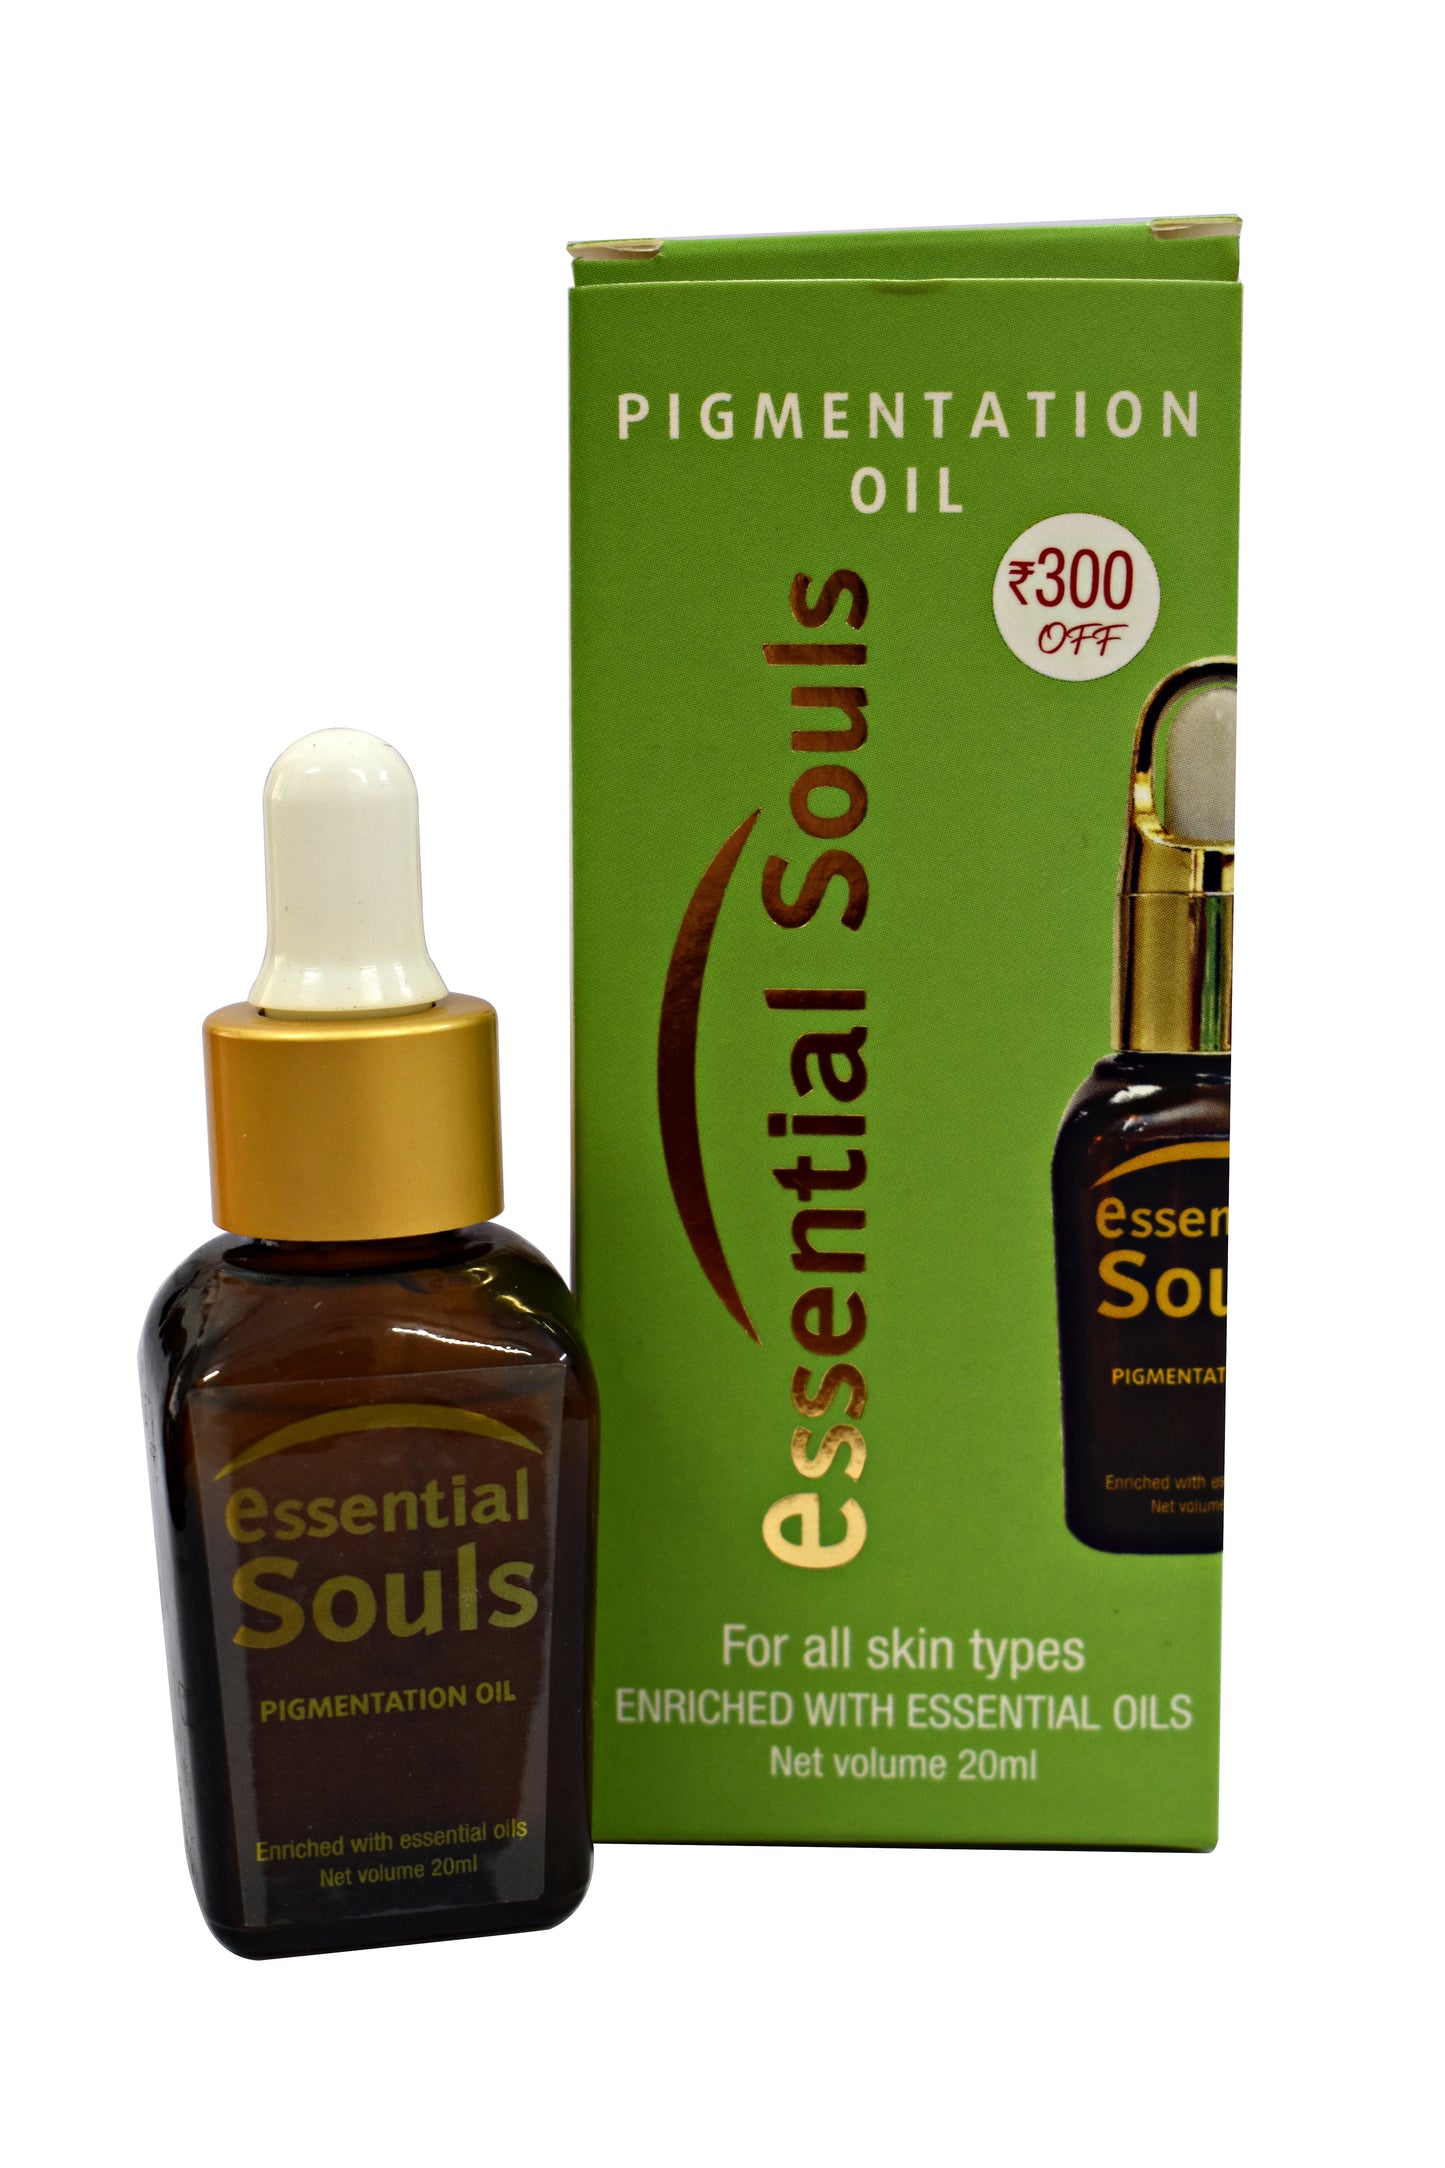 Essential Souls Pigmentation Oil - 20ml